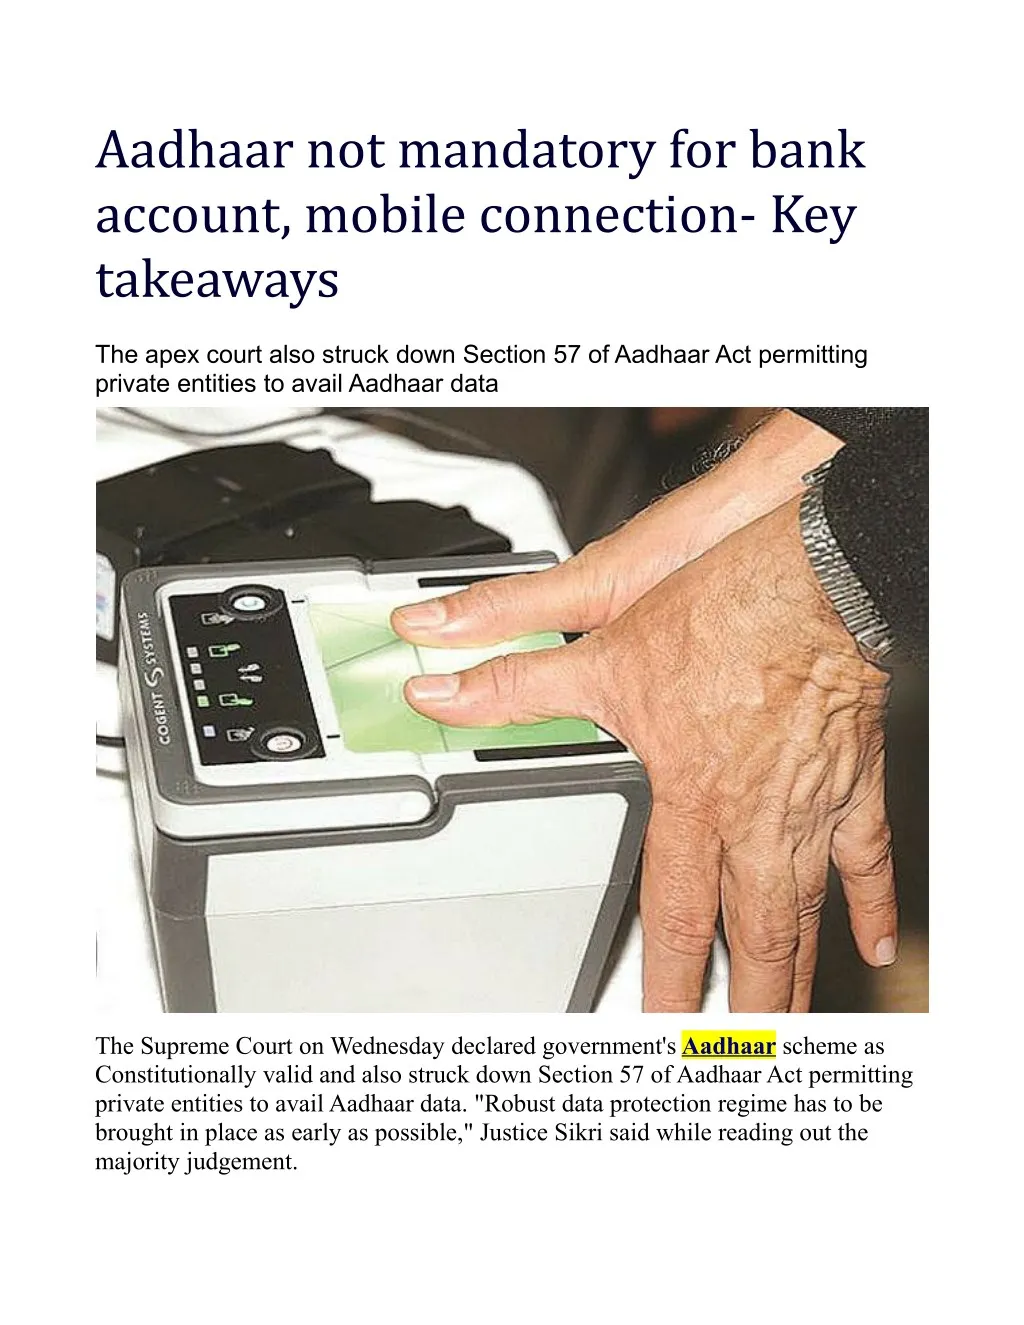 aadhaar not mandatory for bank account mobile